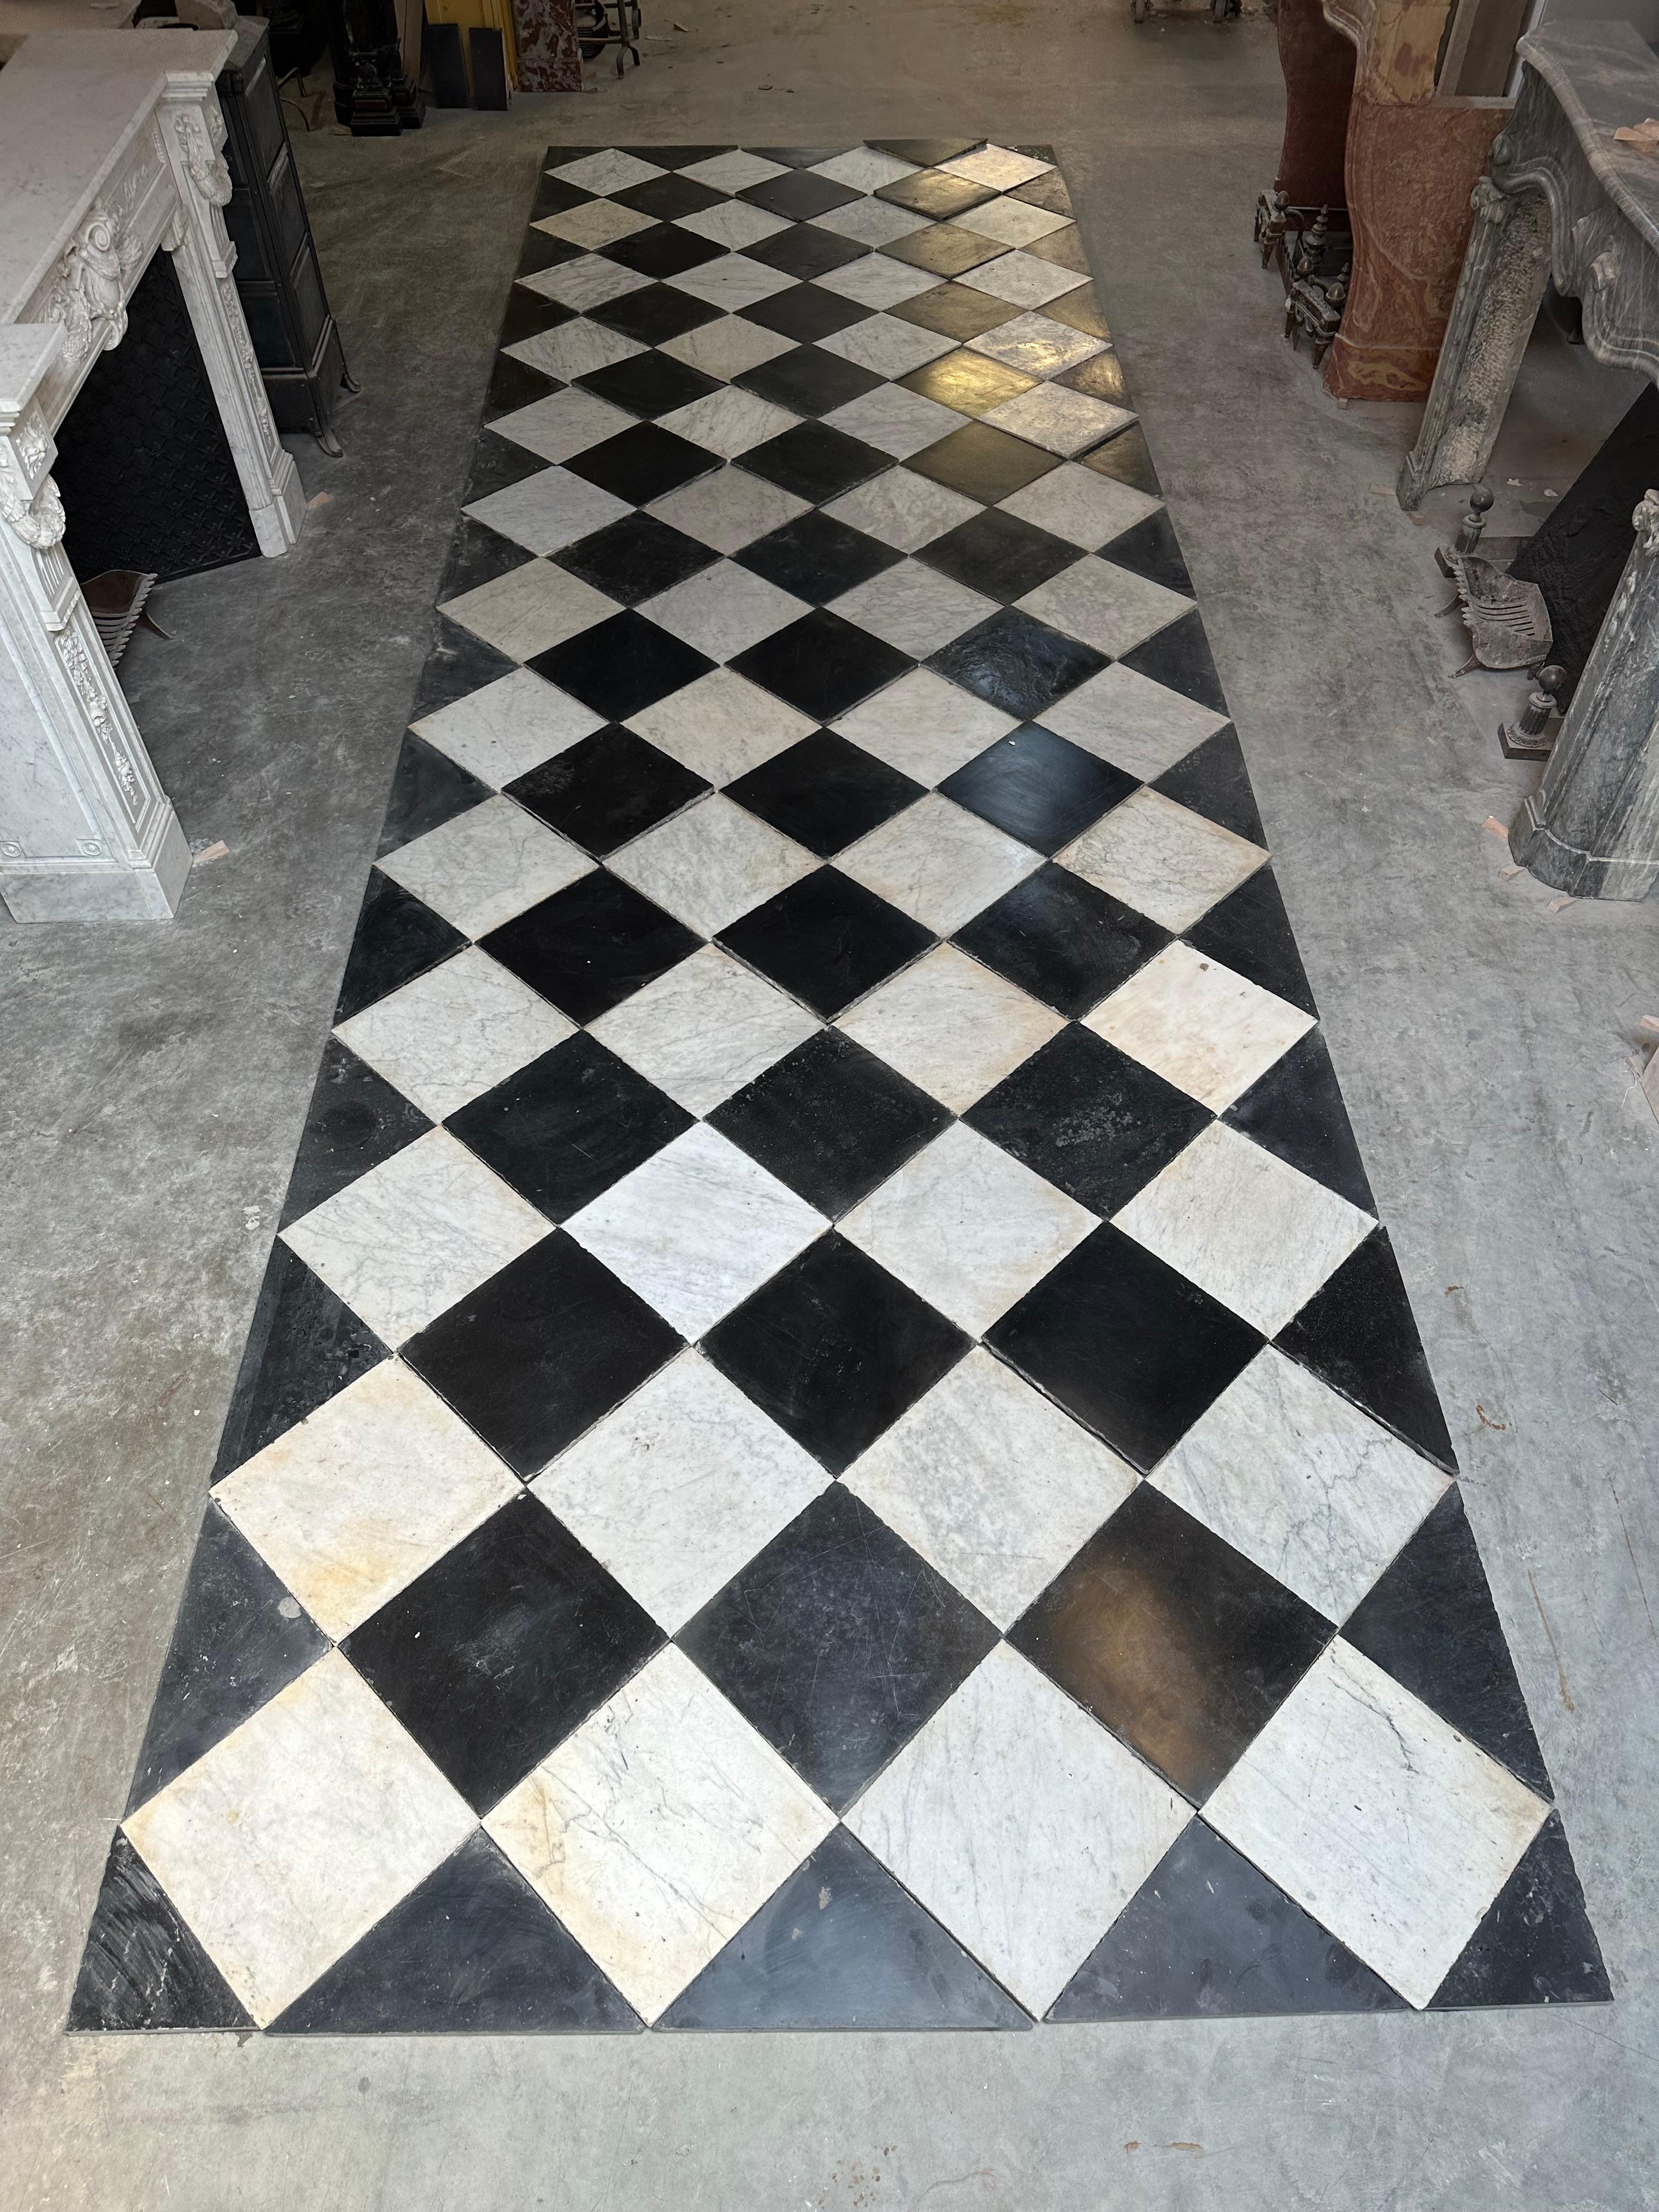 Antique Checkered Black an White Marble Tiles 6